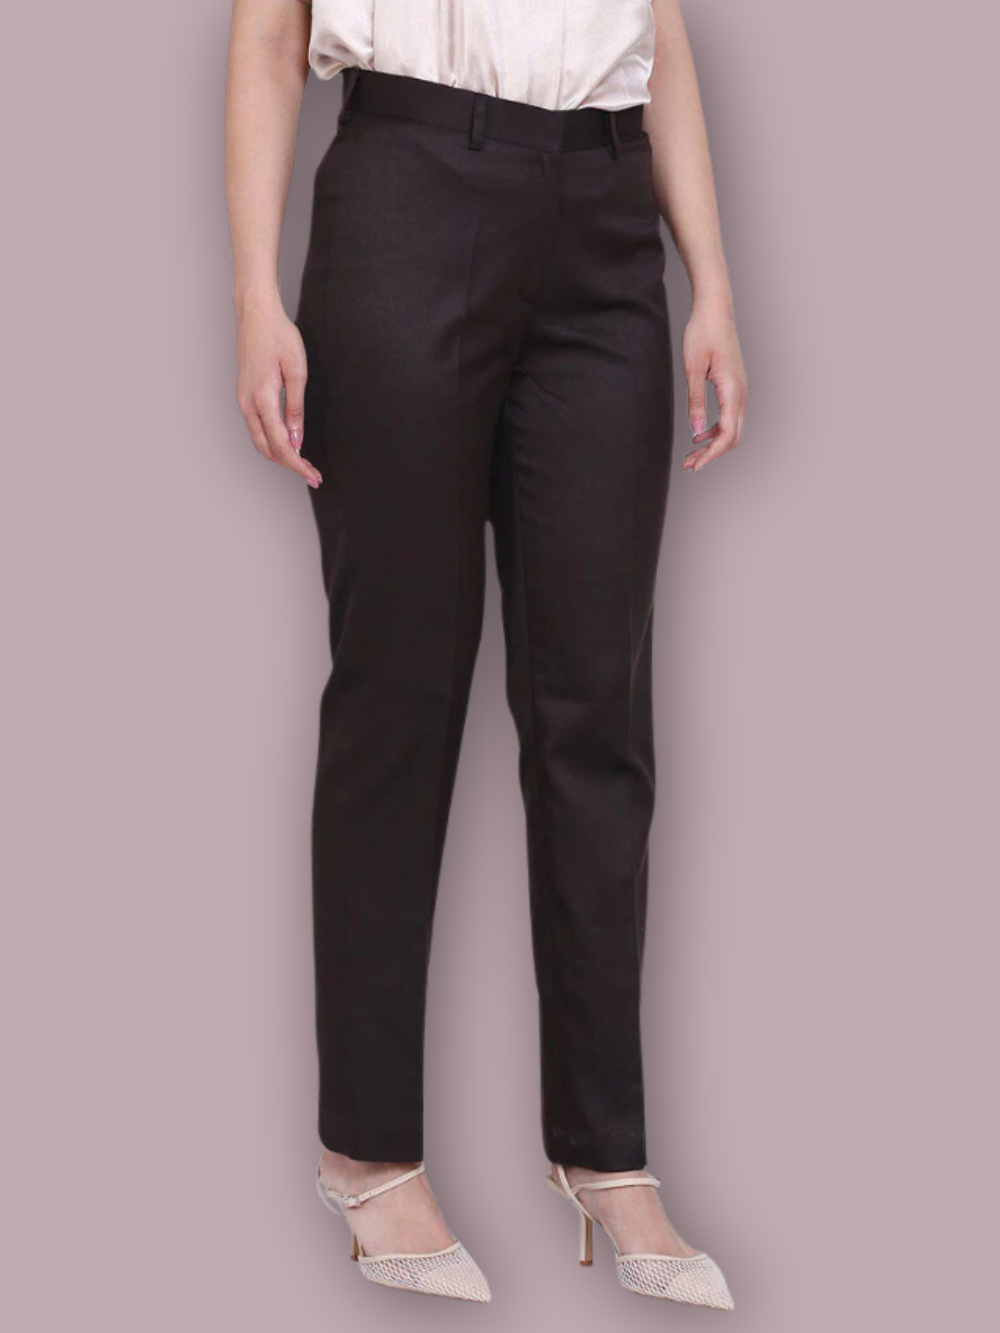 Front Pocket Design Formal Pant Long Loose Parallel Design For Women -  White | Multisize | Fashion | Pants For Women